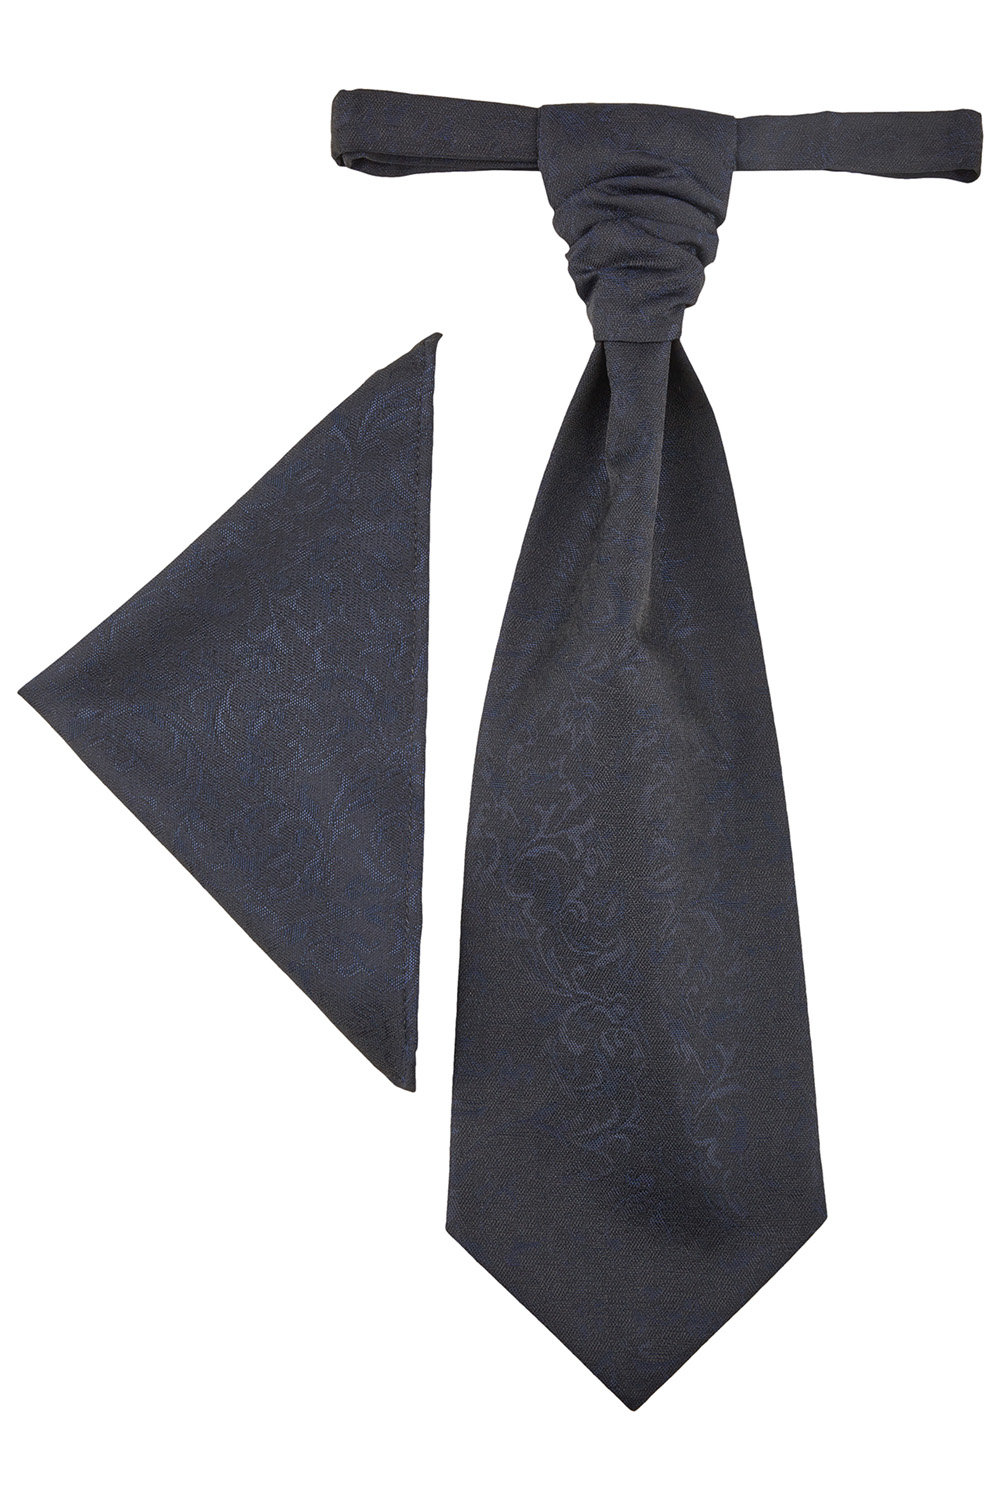 TZIACCO francia nyakkendő 567206-31 Modell 0531